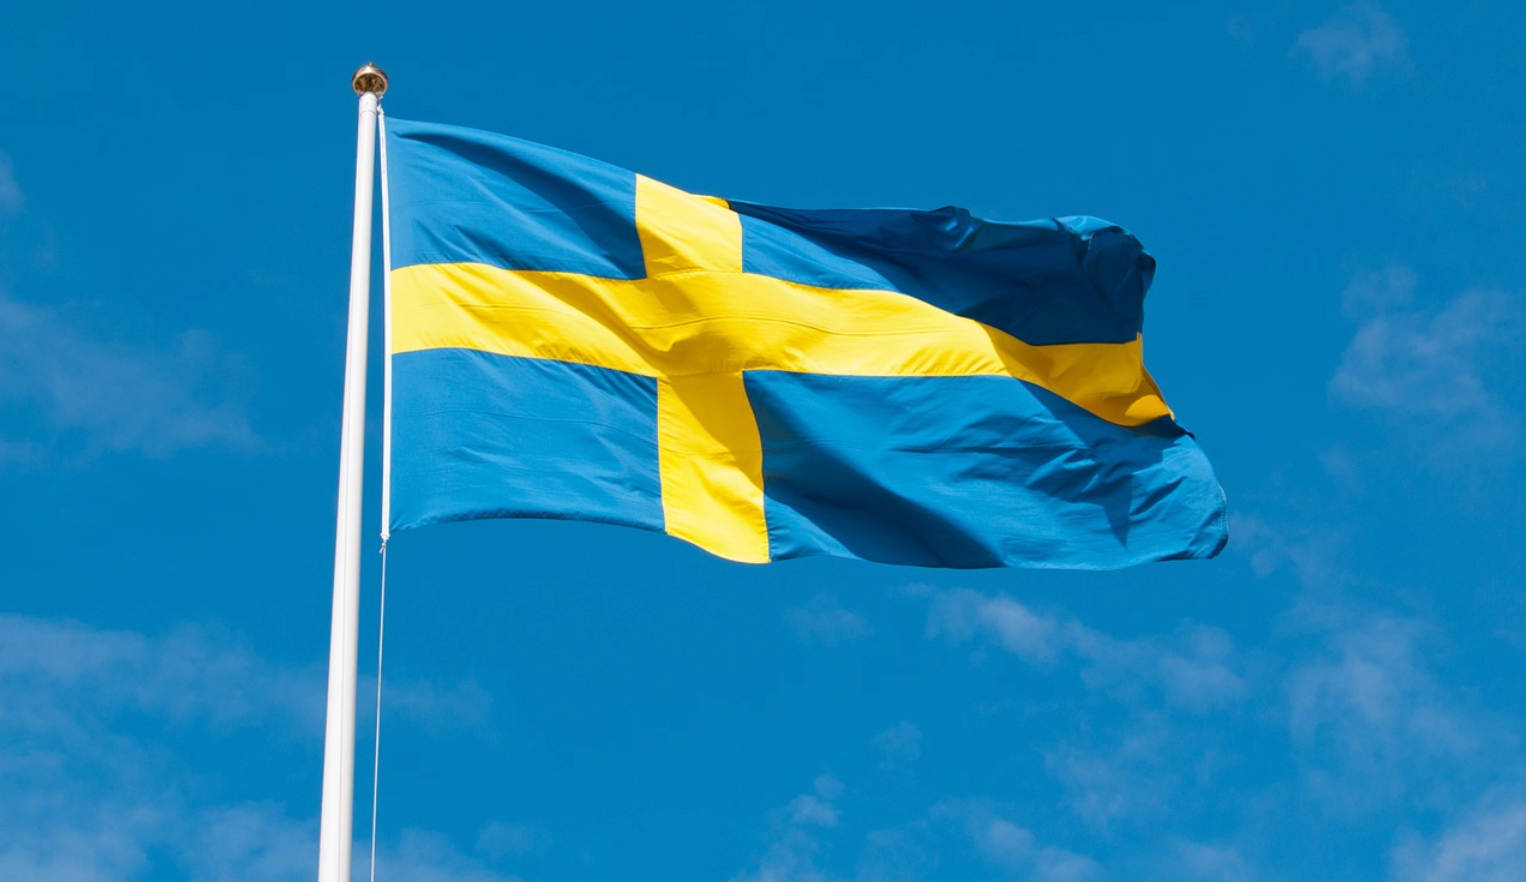 Sweden Government Visa's Sponsorship